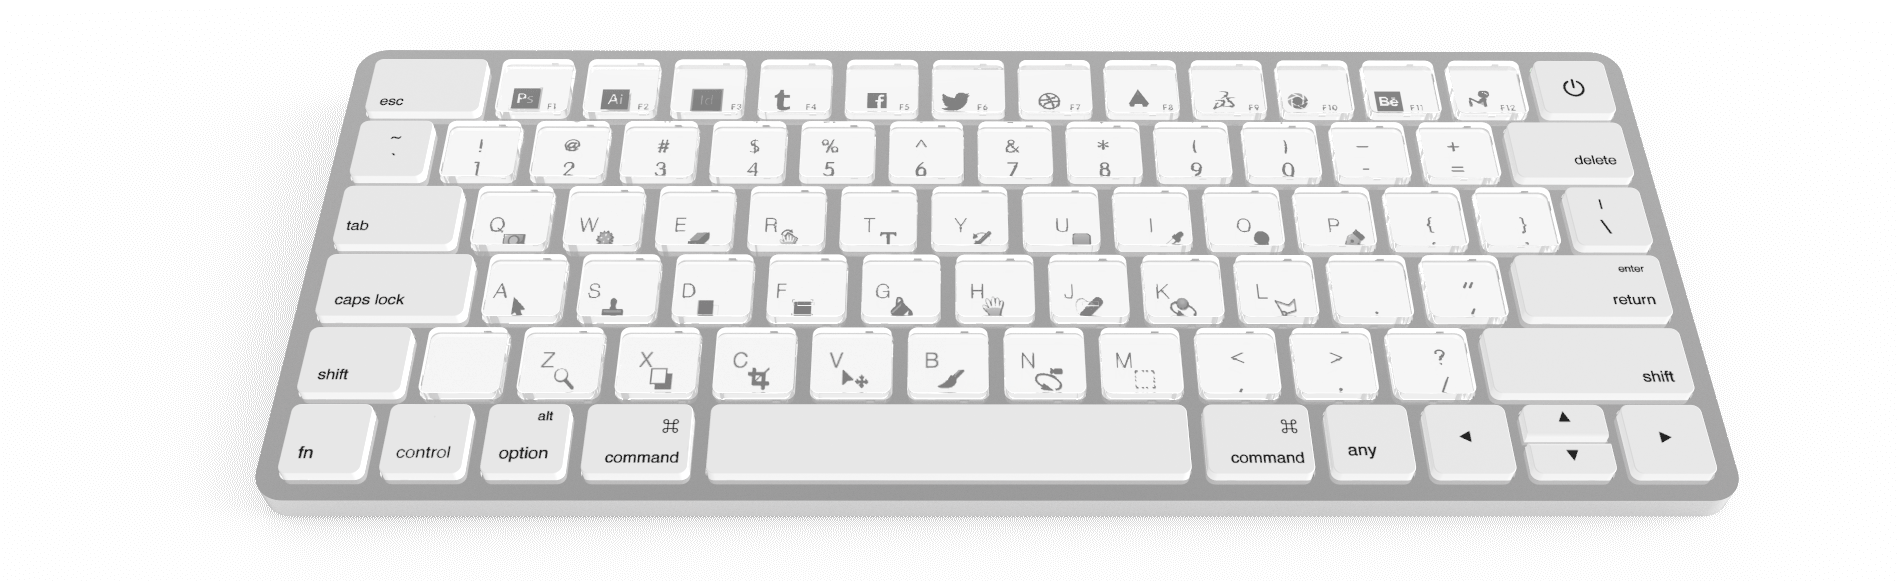 Sonder keyboard Infinite possibilities at your fingertips